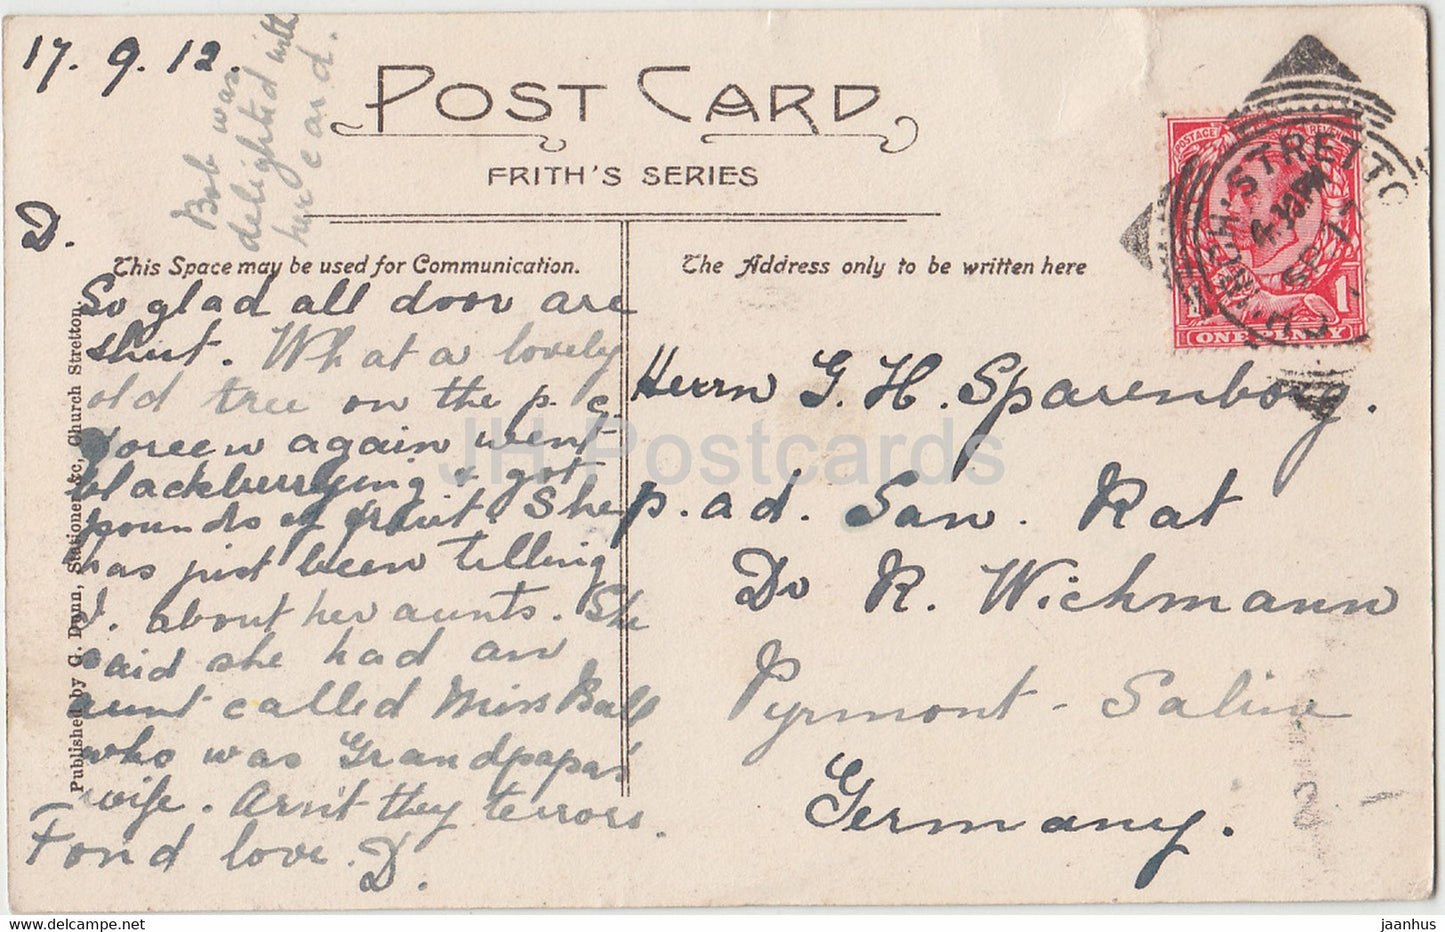 Church Stretton - Longmynd Hotel &amp; Caradoc - carte postale ancienne - Angleterre - 1912 - Royaume-Uni - utilisé